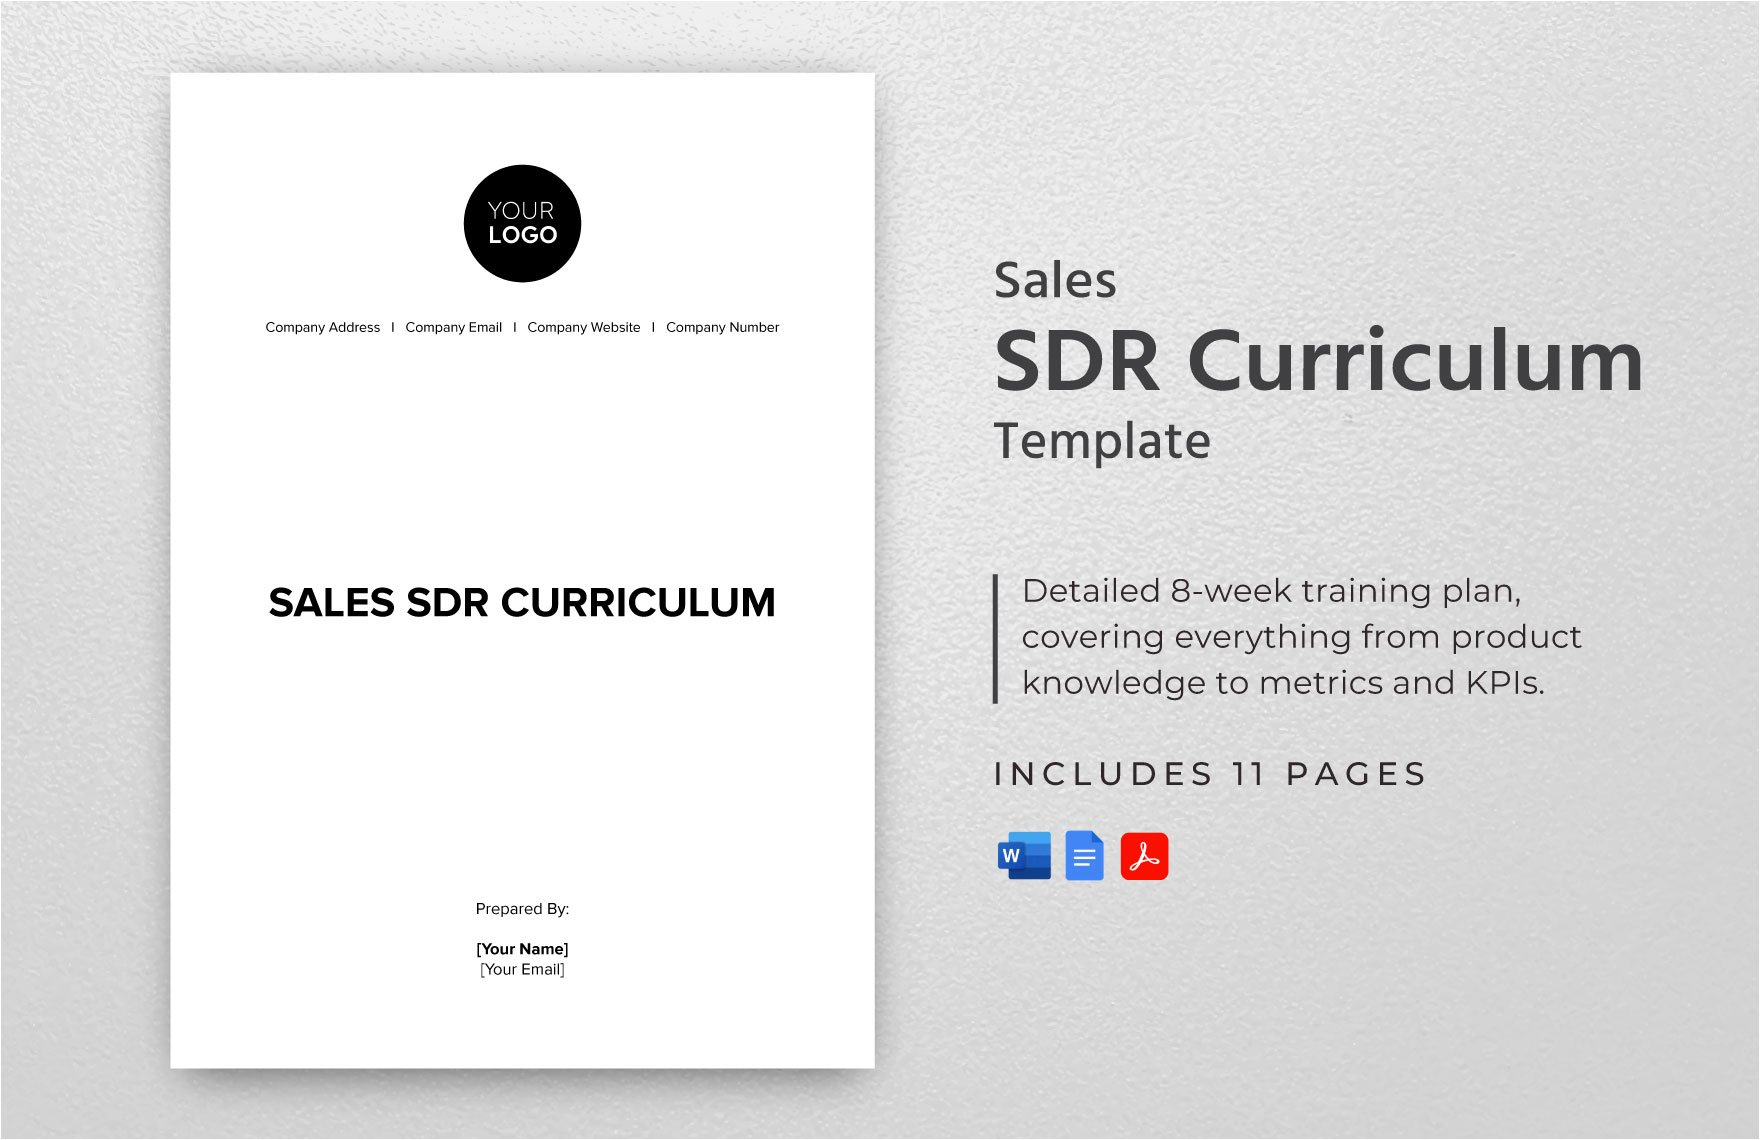 Sales SDR Curriculum Template